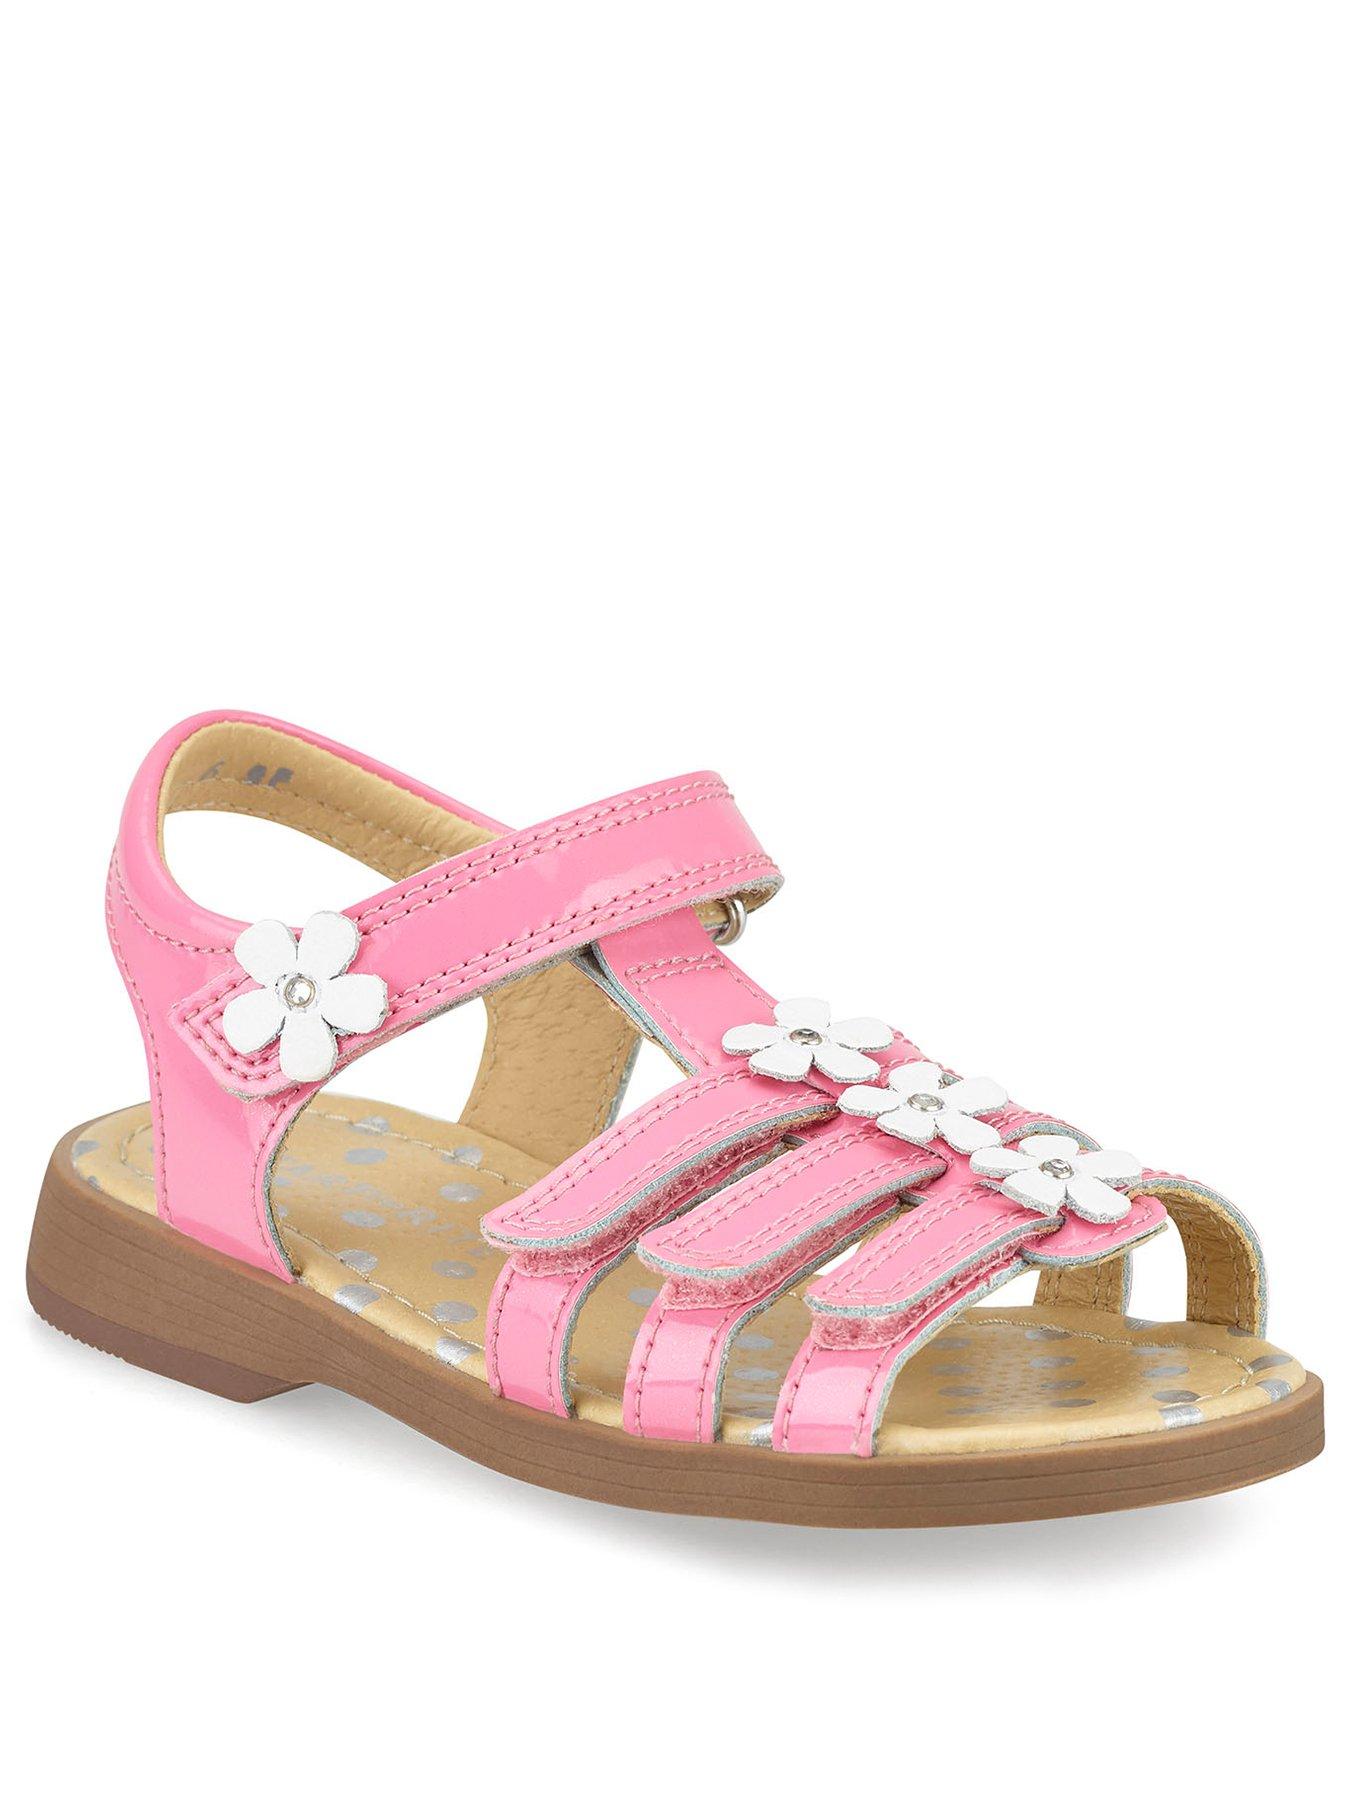 Start-rite Girls Picnic Sandals - Pink Glitter | very.co.uk